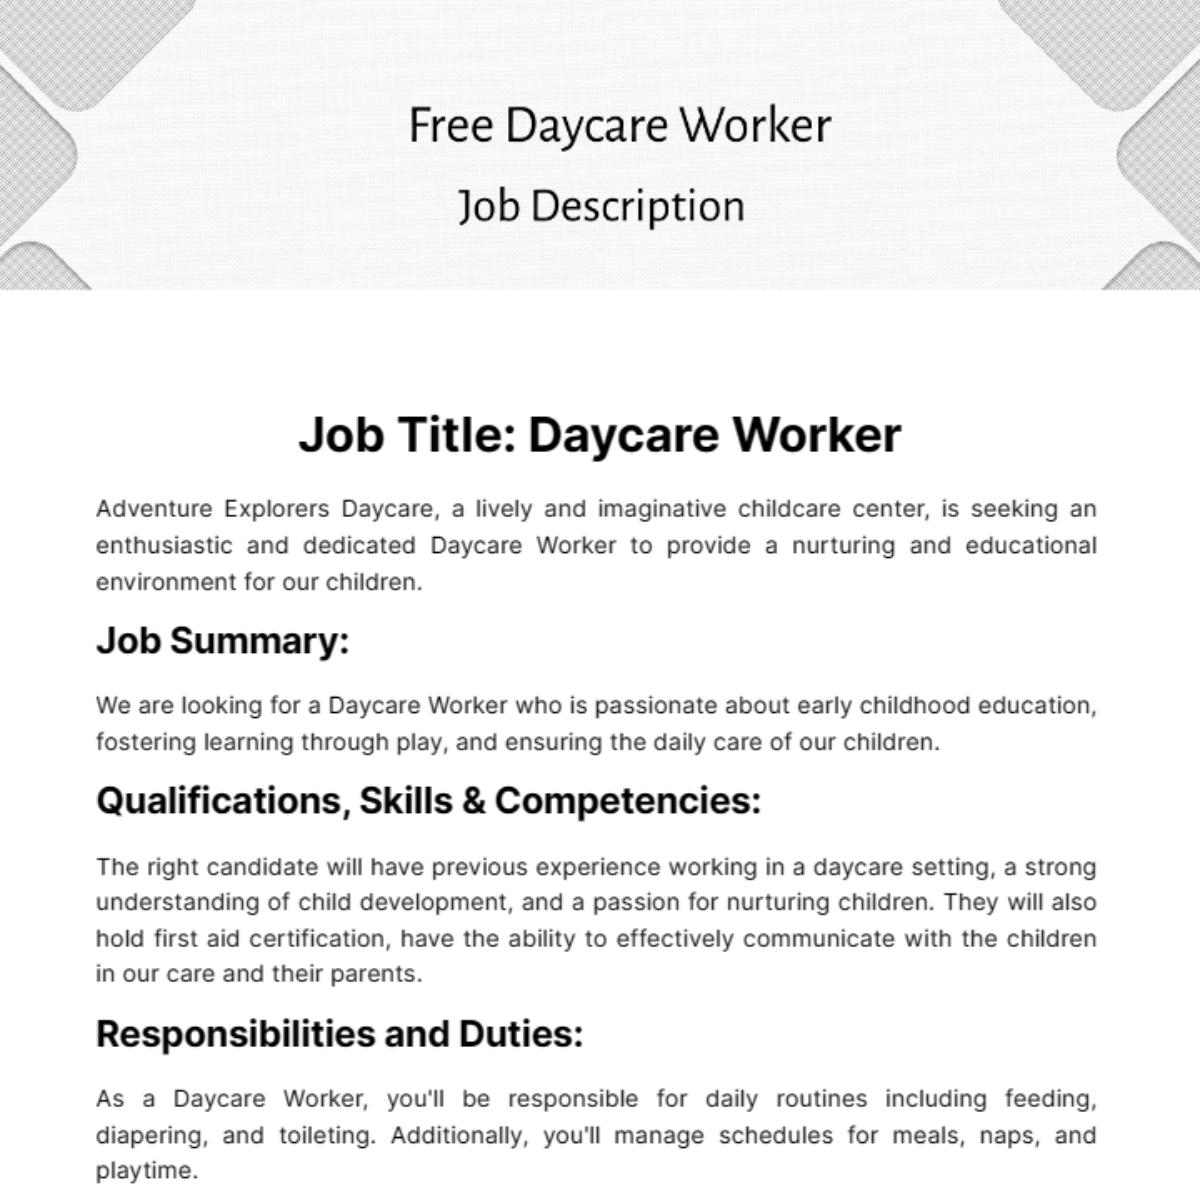 Free Daycare Worker Job Description Template